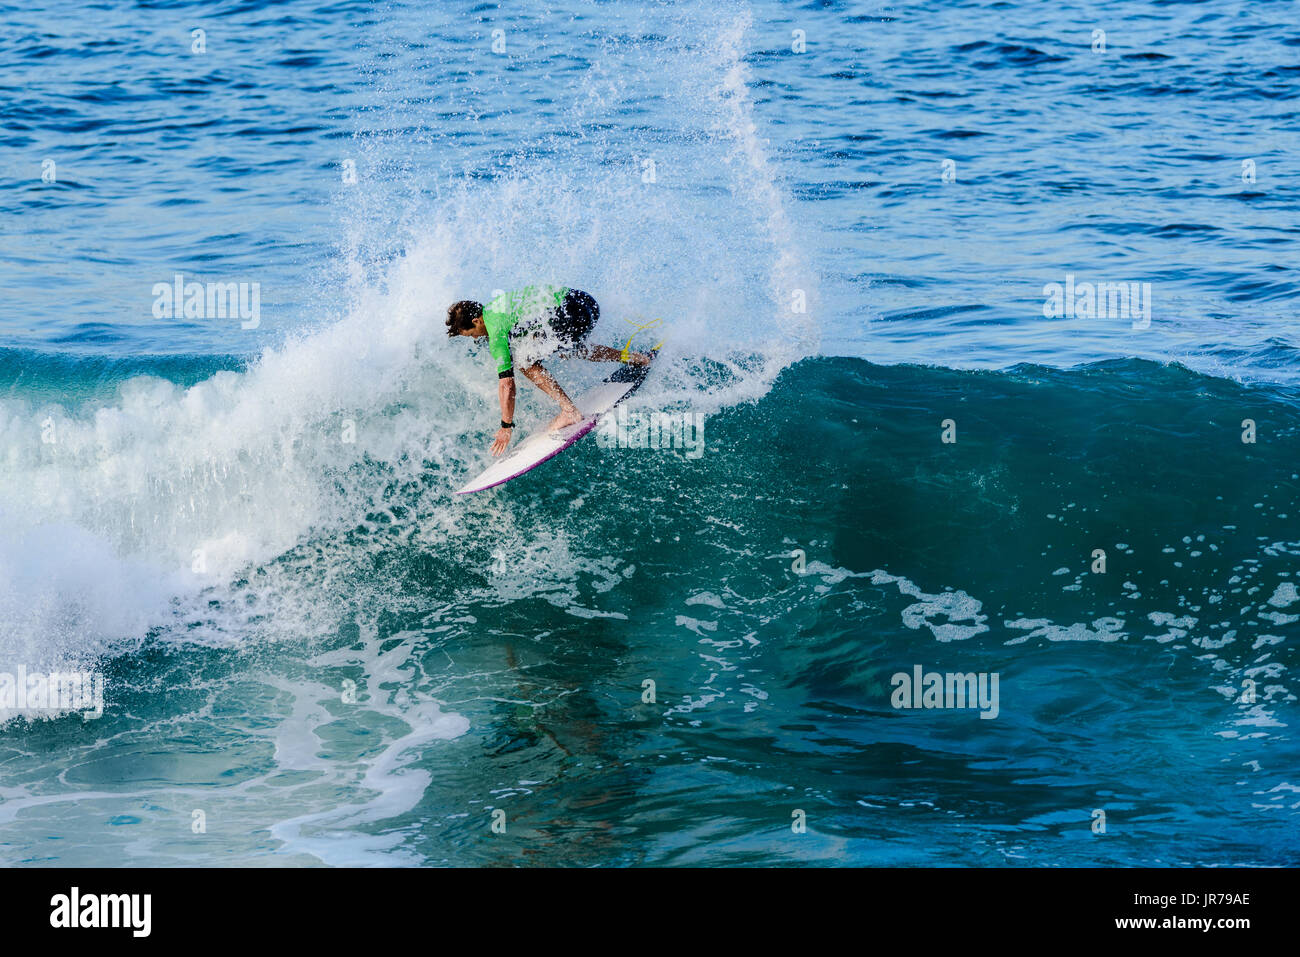 Huntington Beach, FL, USA. 3. August 2017. Kiron Jabour (USA-Hawaii) konkurriert bei der 2017 VANS uns Open of Surfing. Bildnachweis: Benjamin Ginsberg/Alamy Live-Nachrichten. Stockfoto